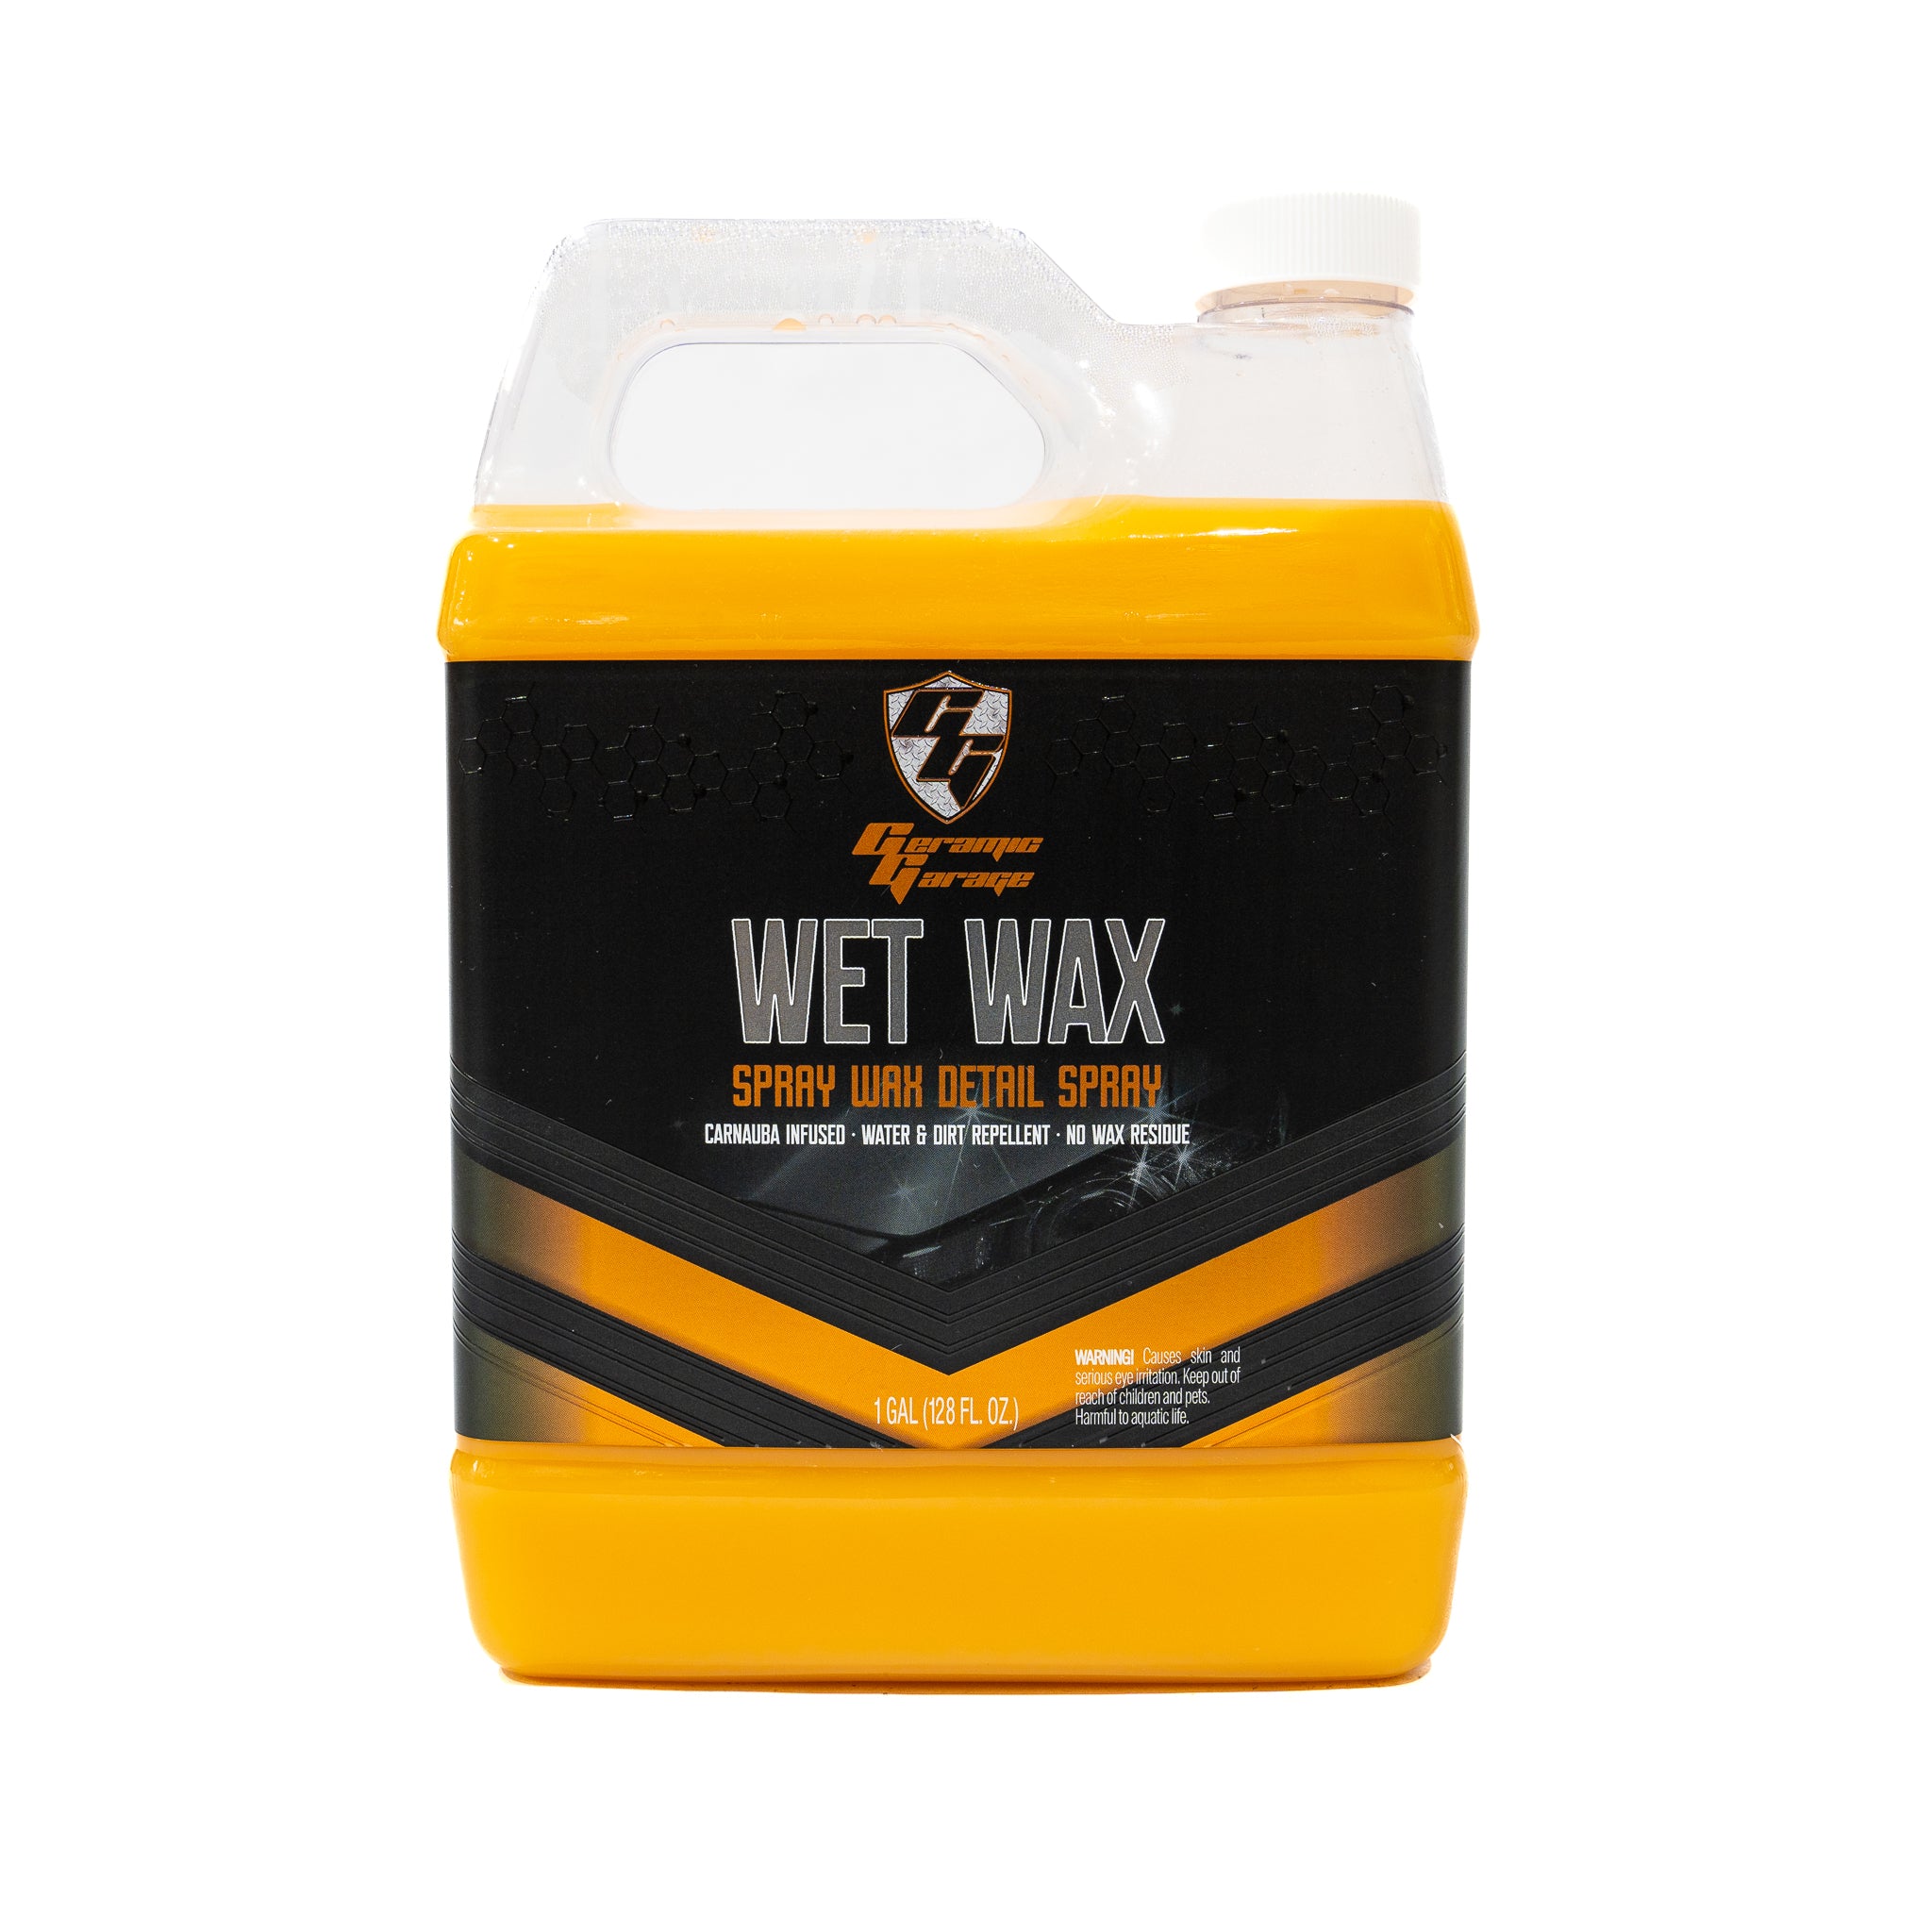 Detail Garage - What wax do you like better? butter wet wax or